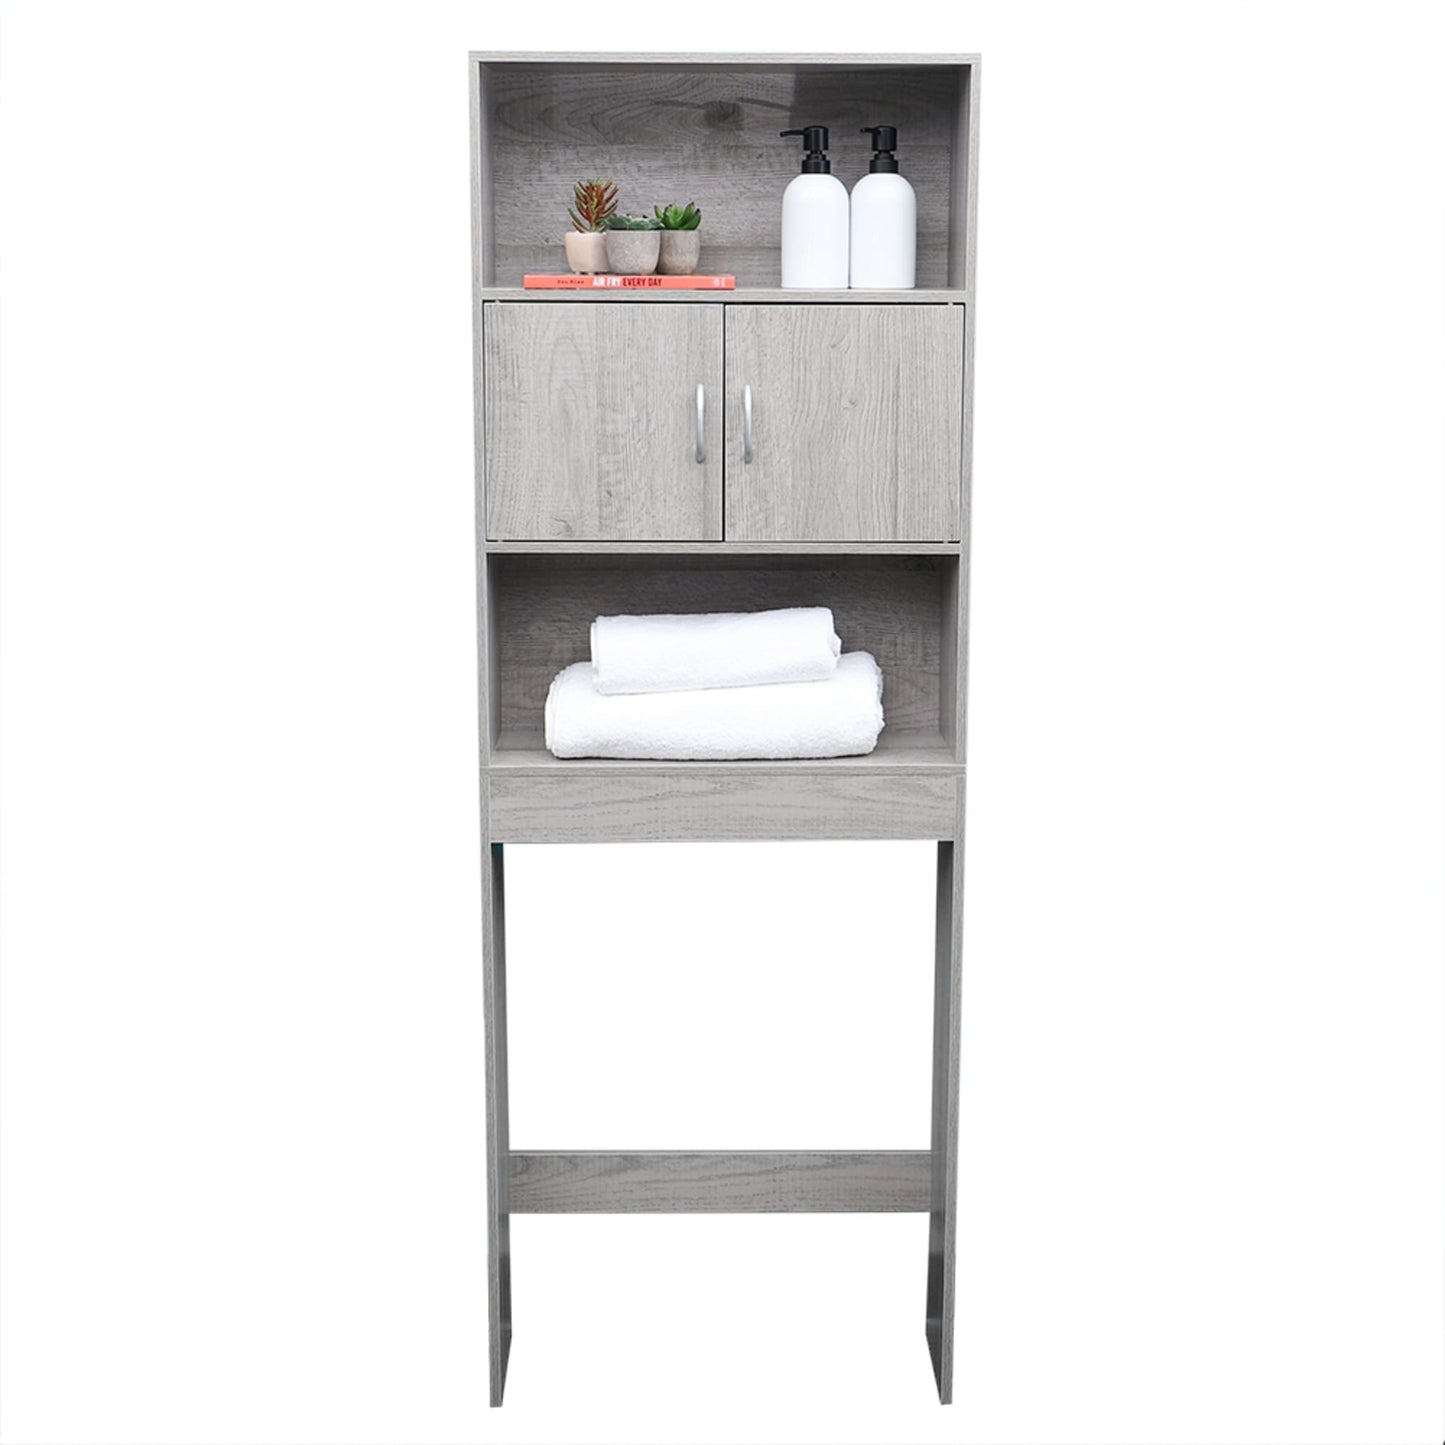 Bathroom Storage Table with Shelf